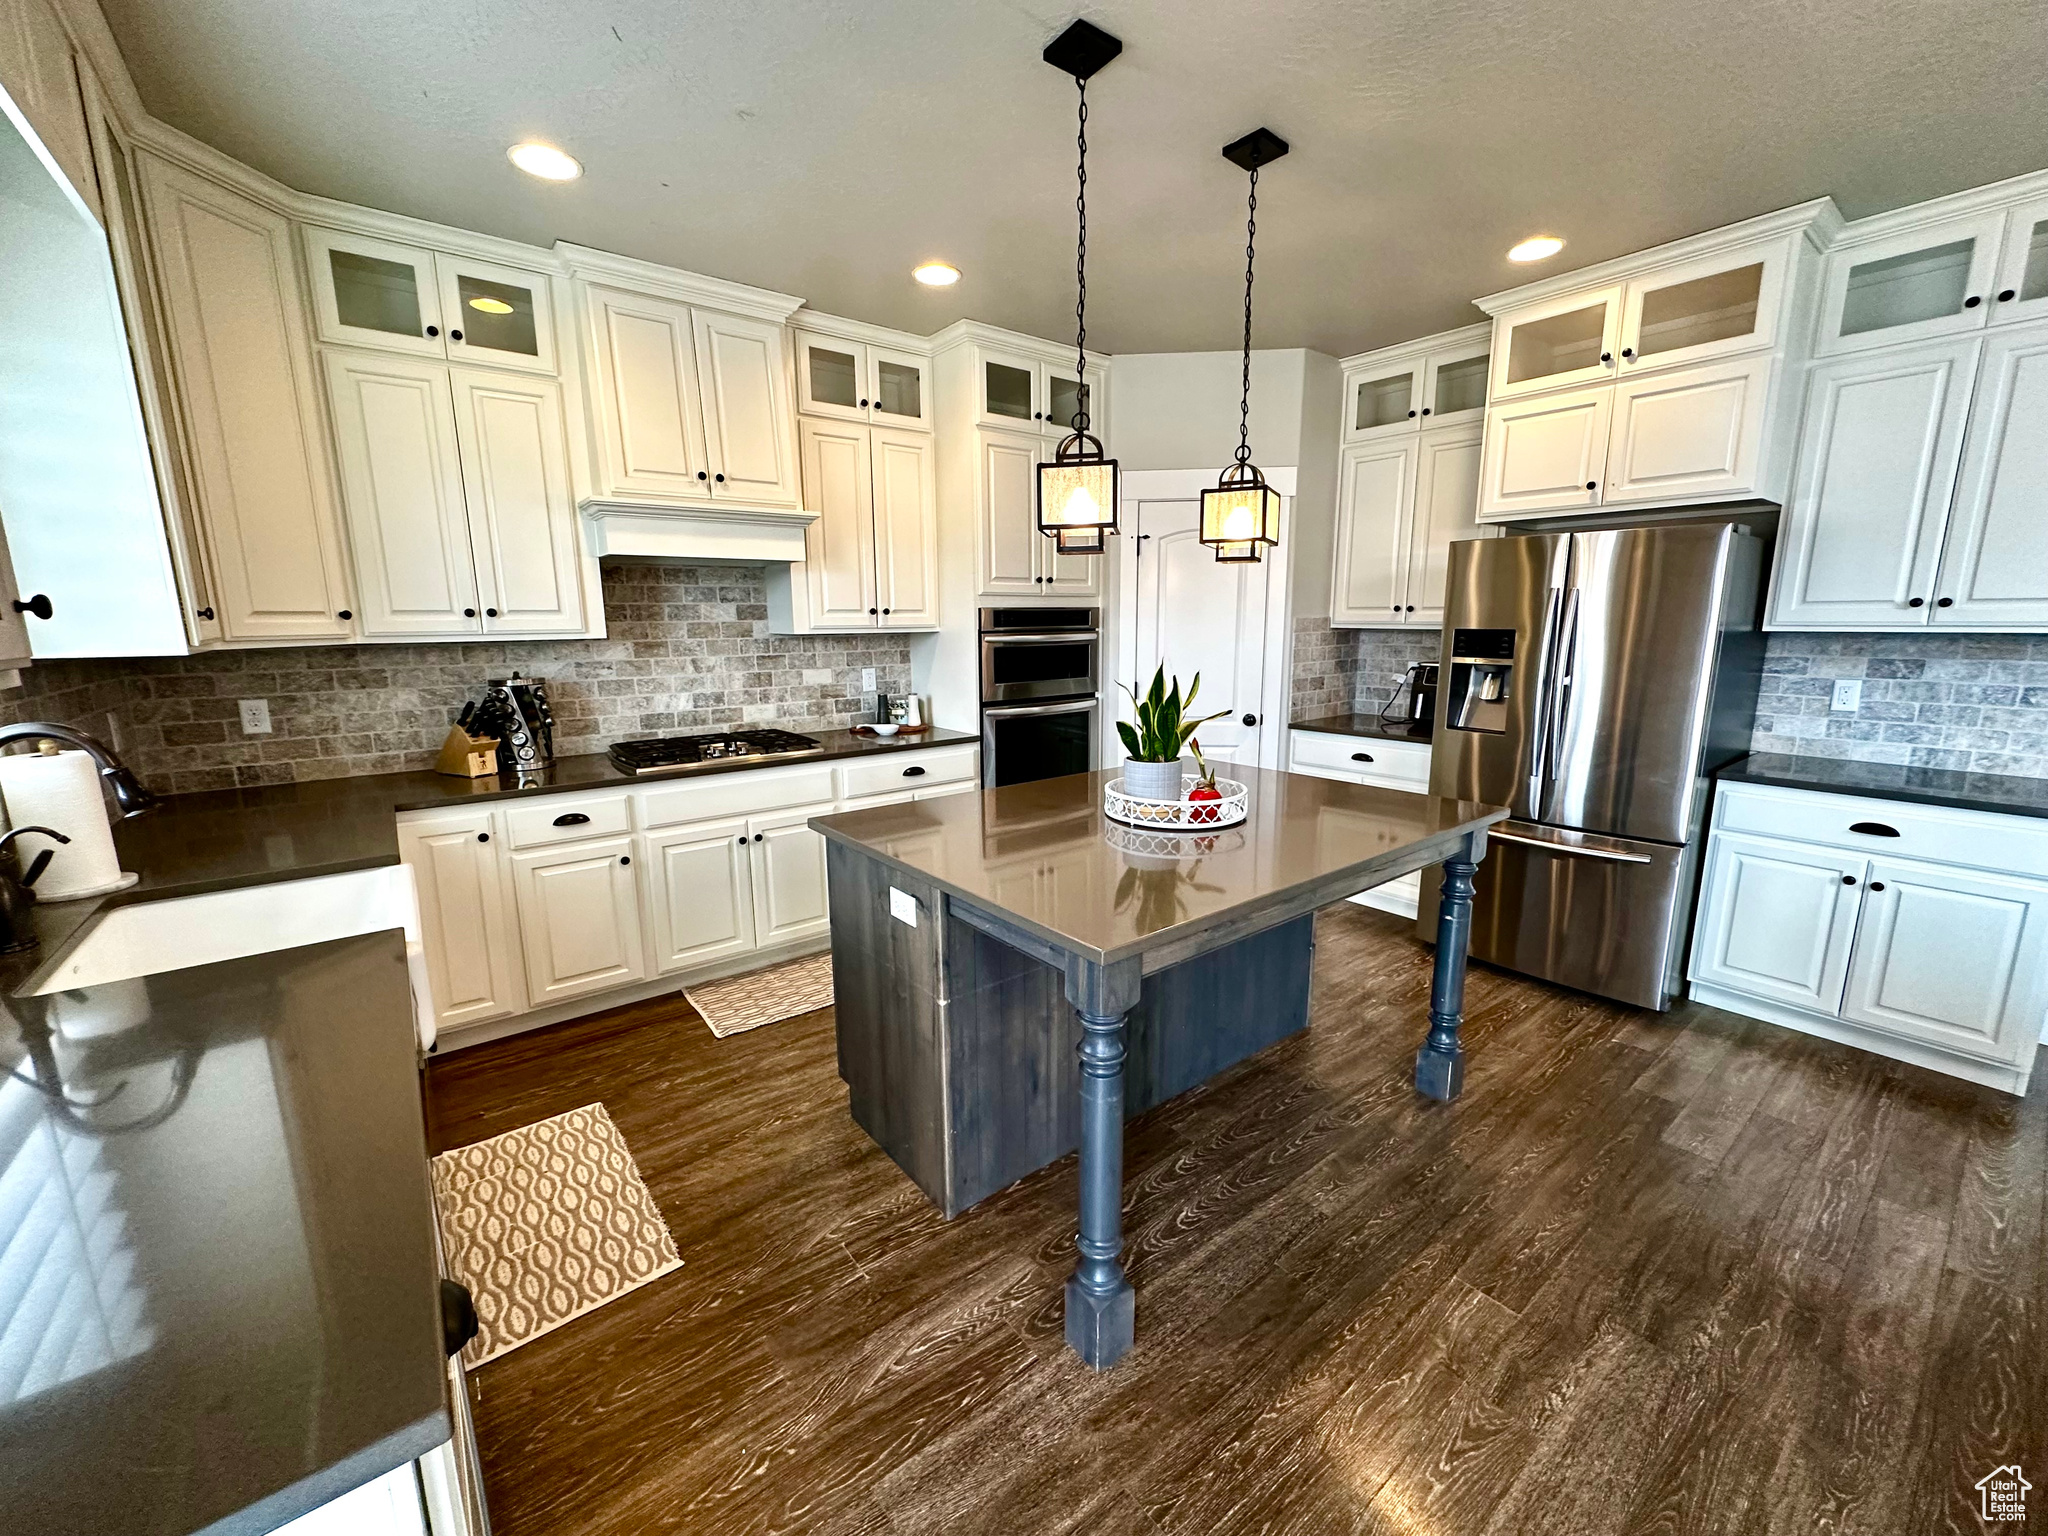 Kitchen with white cabinets, hanging light fixtures, tasteful backsplash, dark hardwood / wood-style flooring, and stainless steel appliances